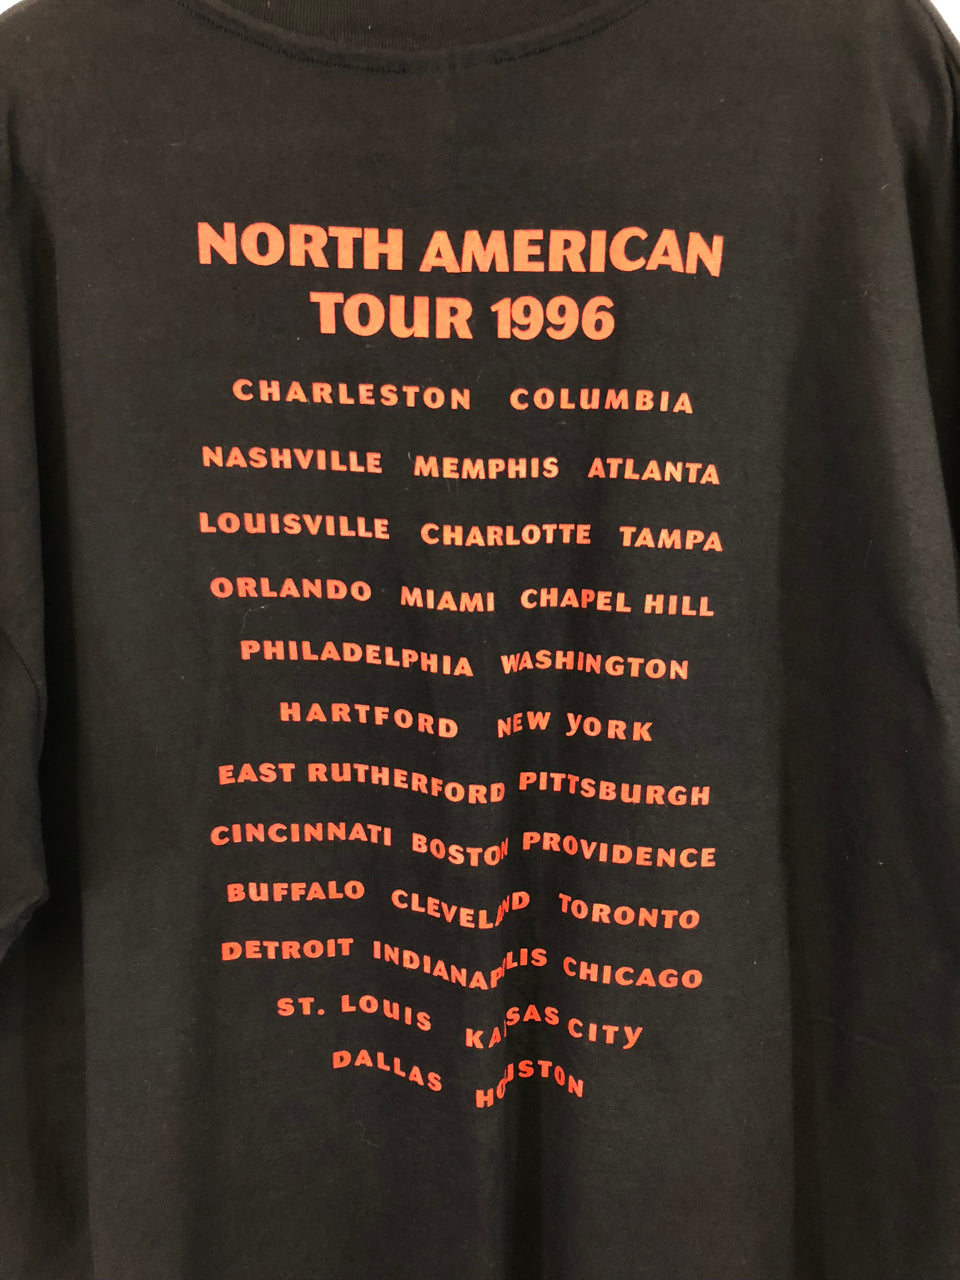 Bob Seger 1996 Tour T-Shirt